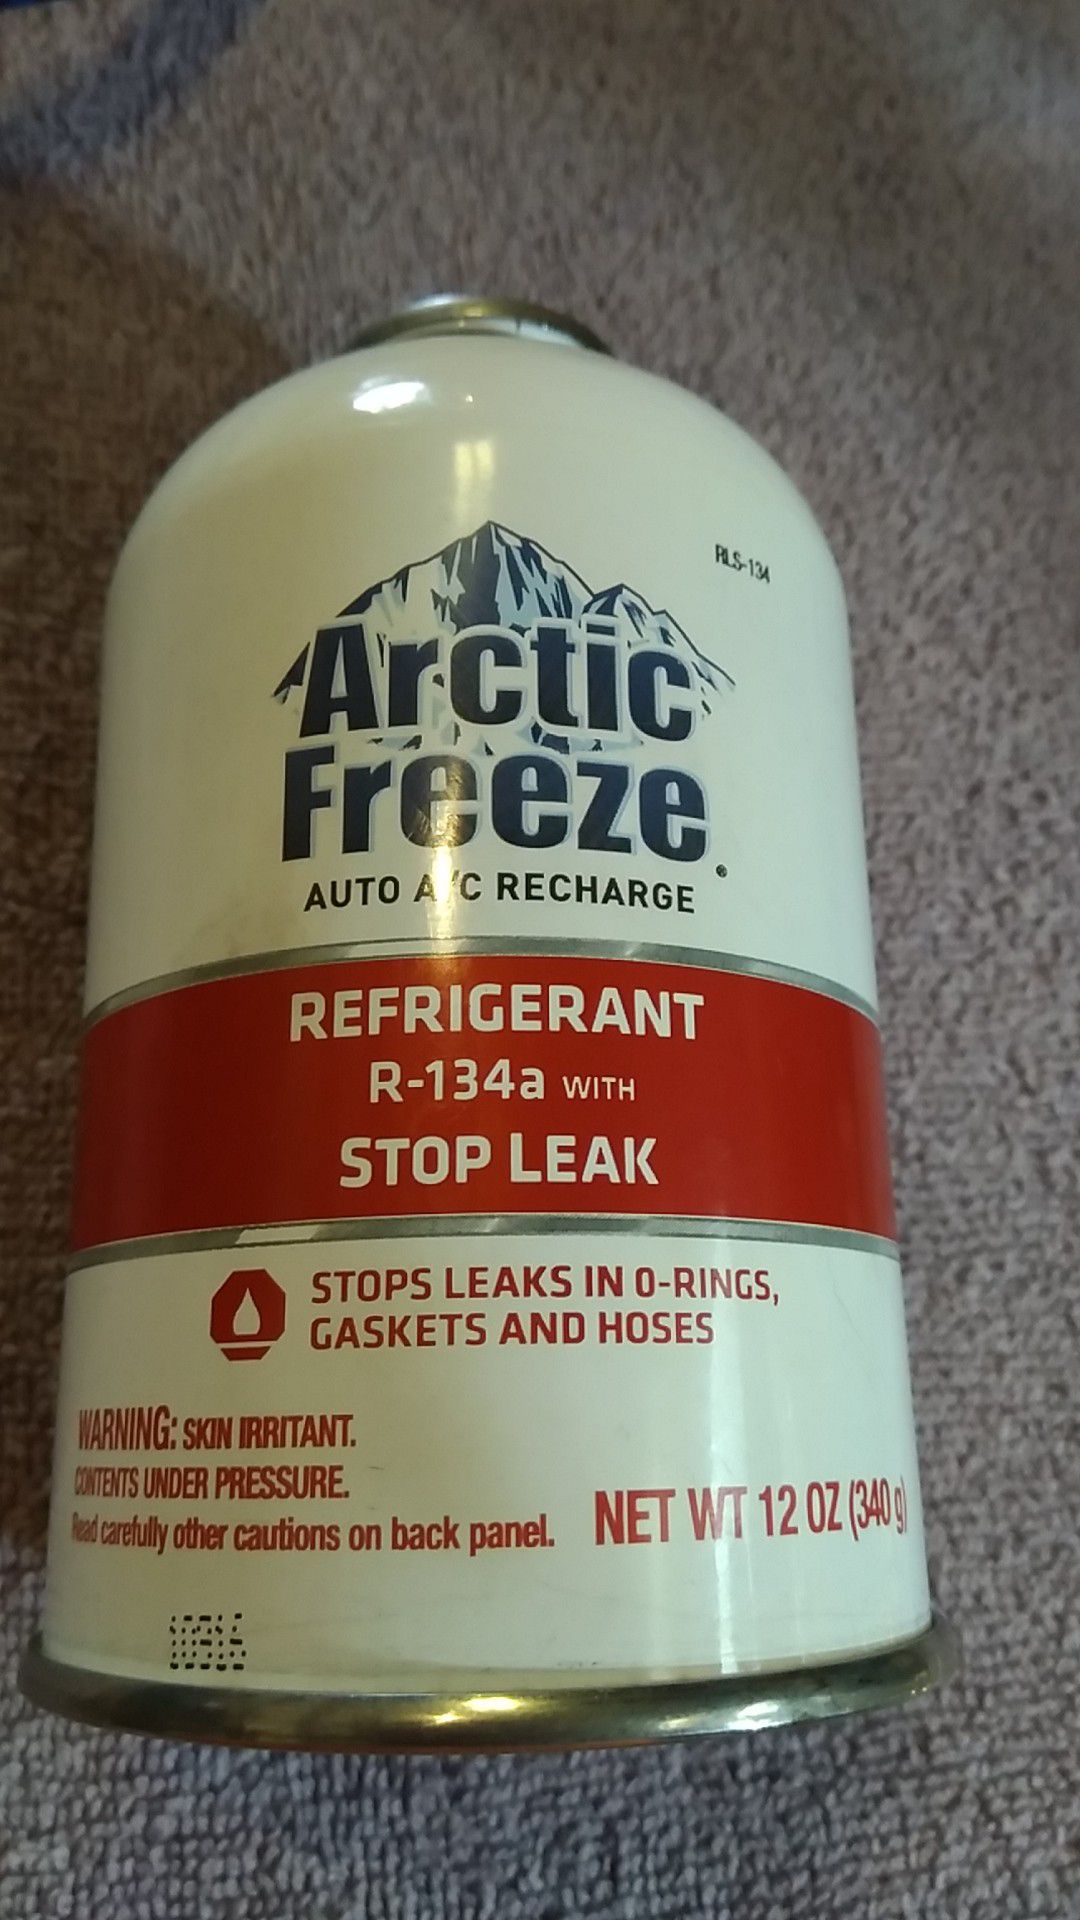 Interdynamic AF81 R134A Leak Sealer with Arctic Freeze Air Conditioner Refrigerant